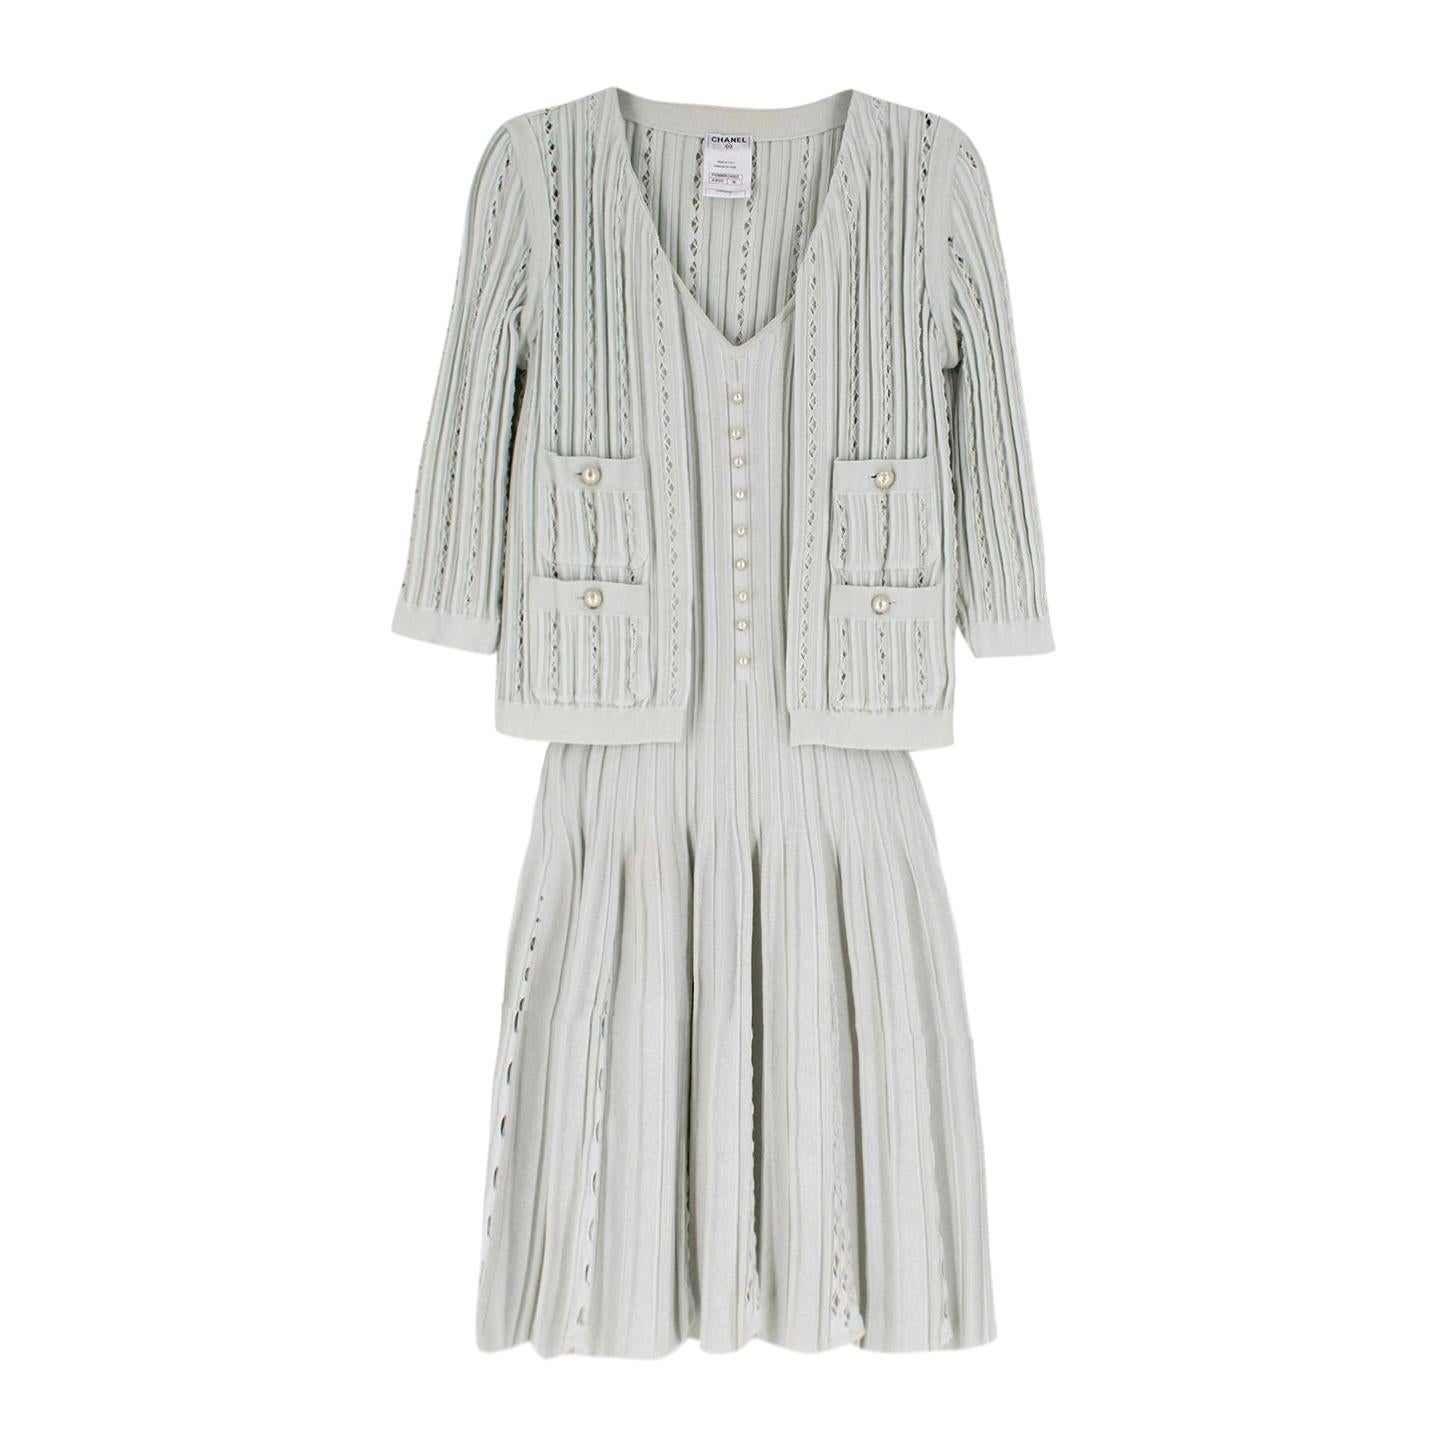 Chanel Cotton-Knit Mint Dress & Cardigan Set SIZE 34 FR